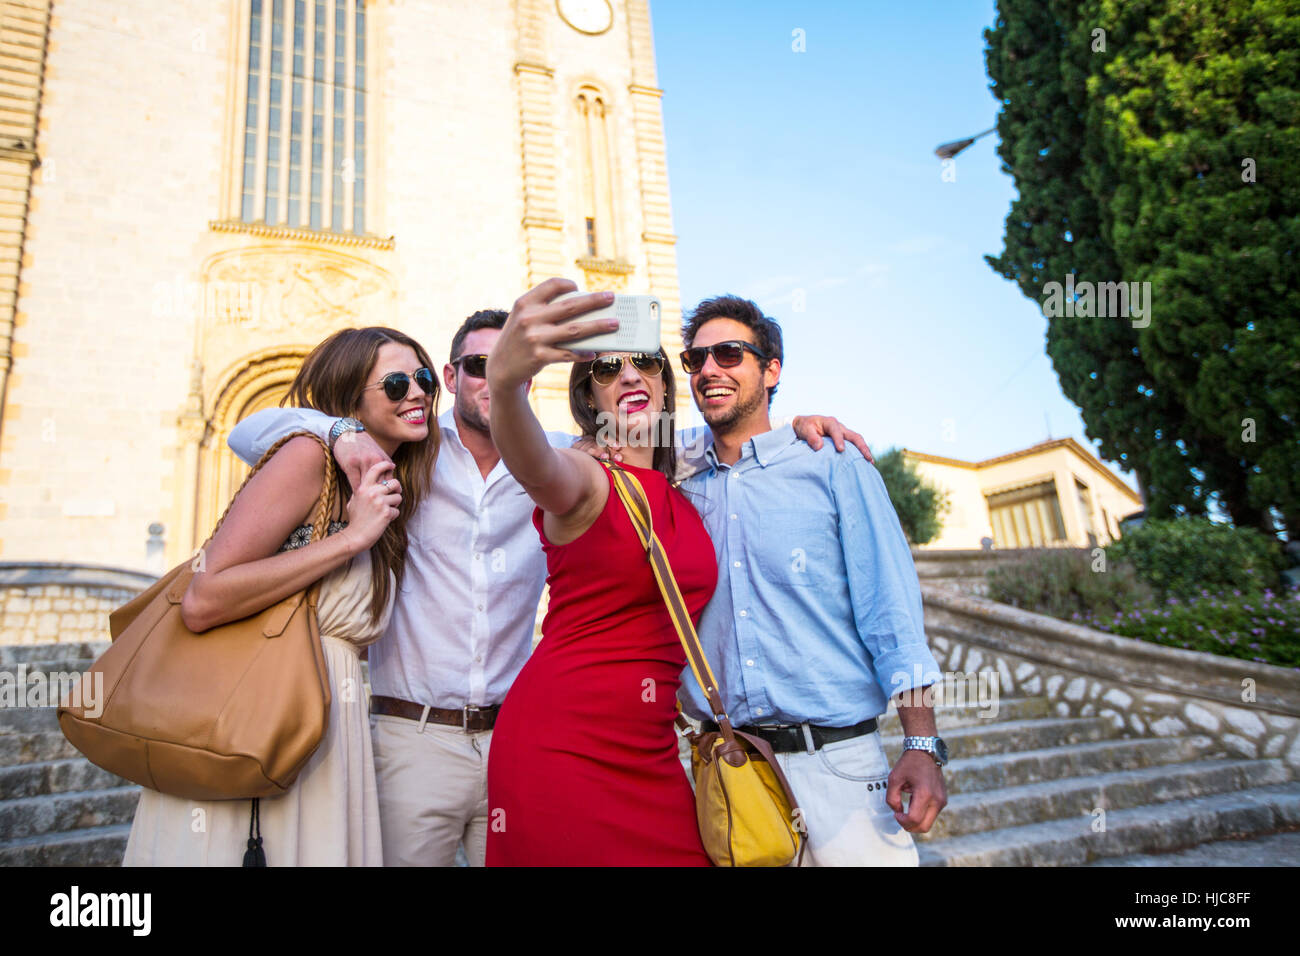 Dos parejas de turistas tomando selfie en frente de la iglesia, Calvià, Mallorca, España Foto de stock